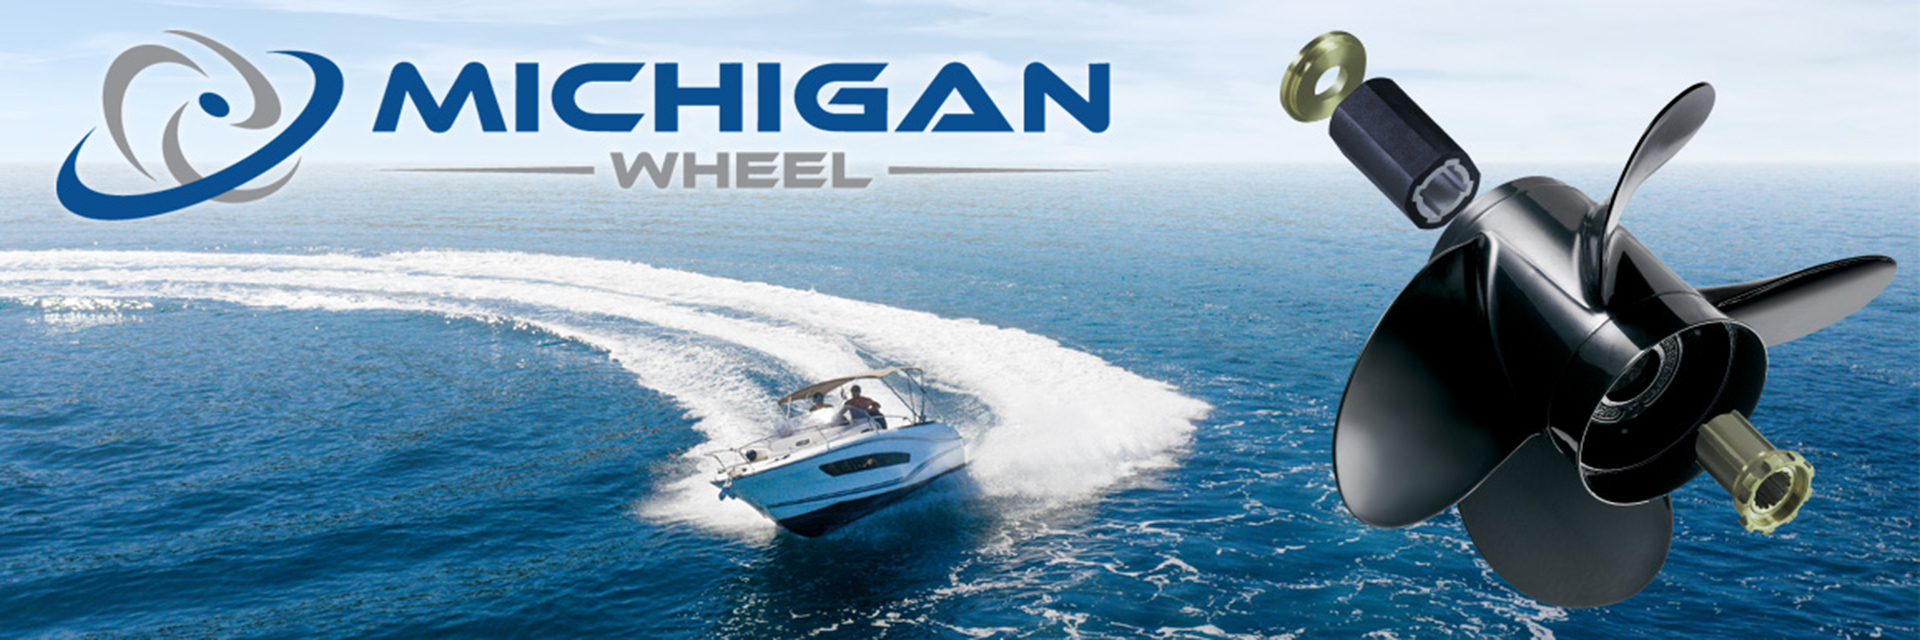 michigan-wheel-brand-page-banner.jpg